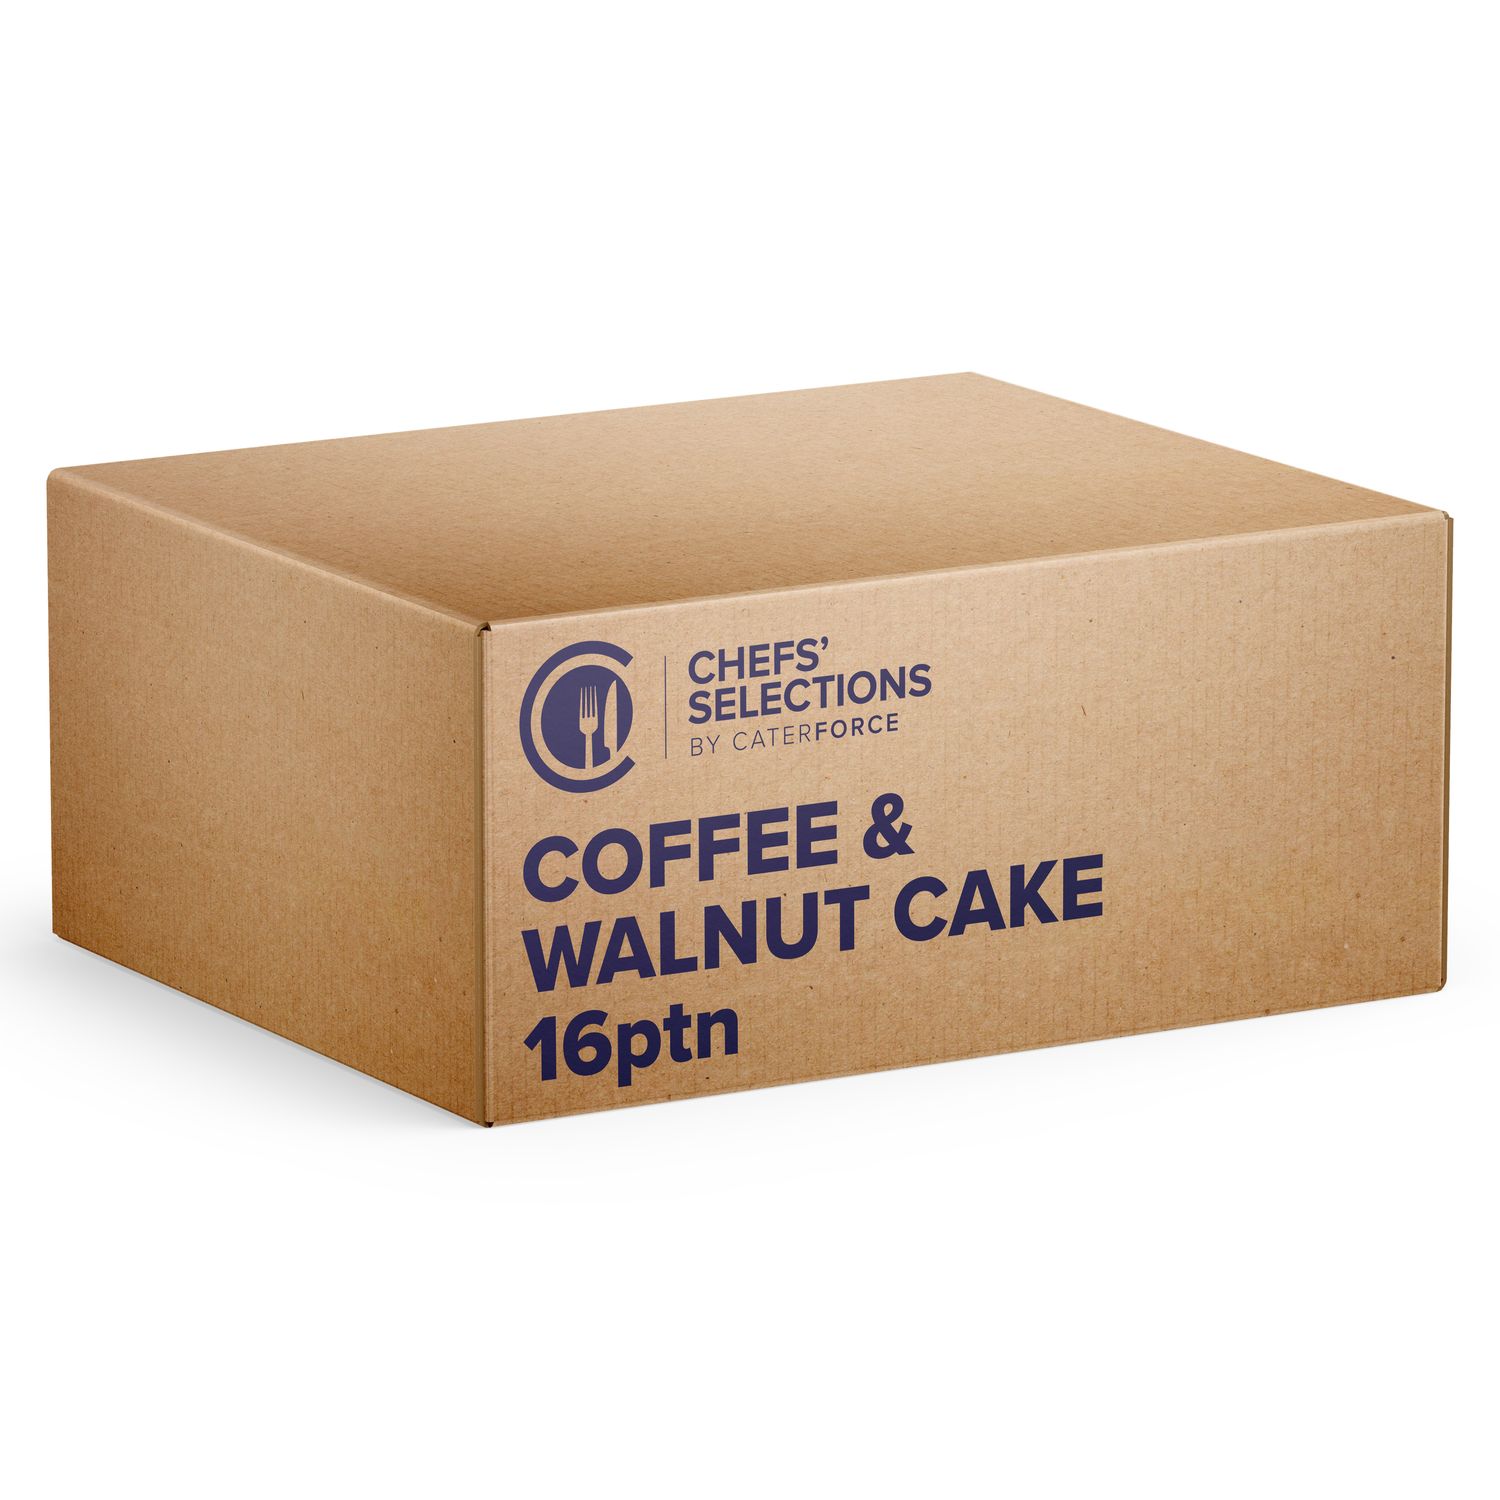 Chefs’ Selections Coffee & Walnut Cake (1 x 16p/ptn)